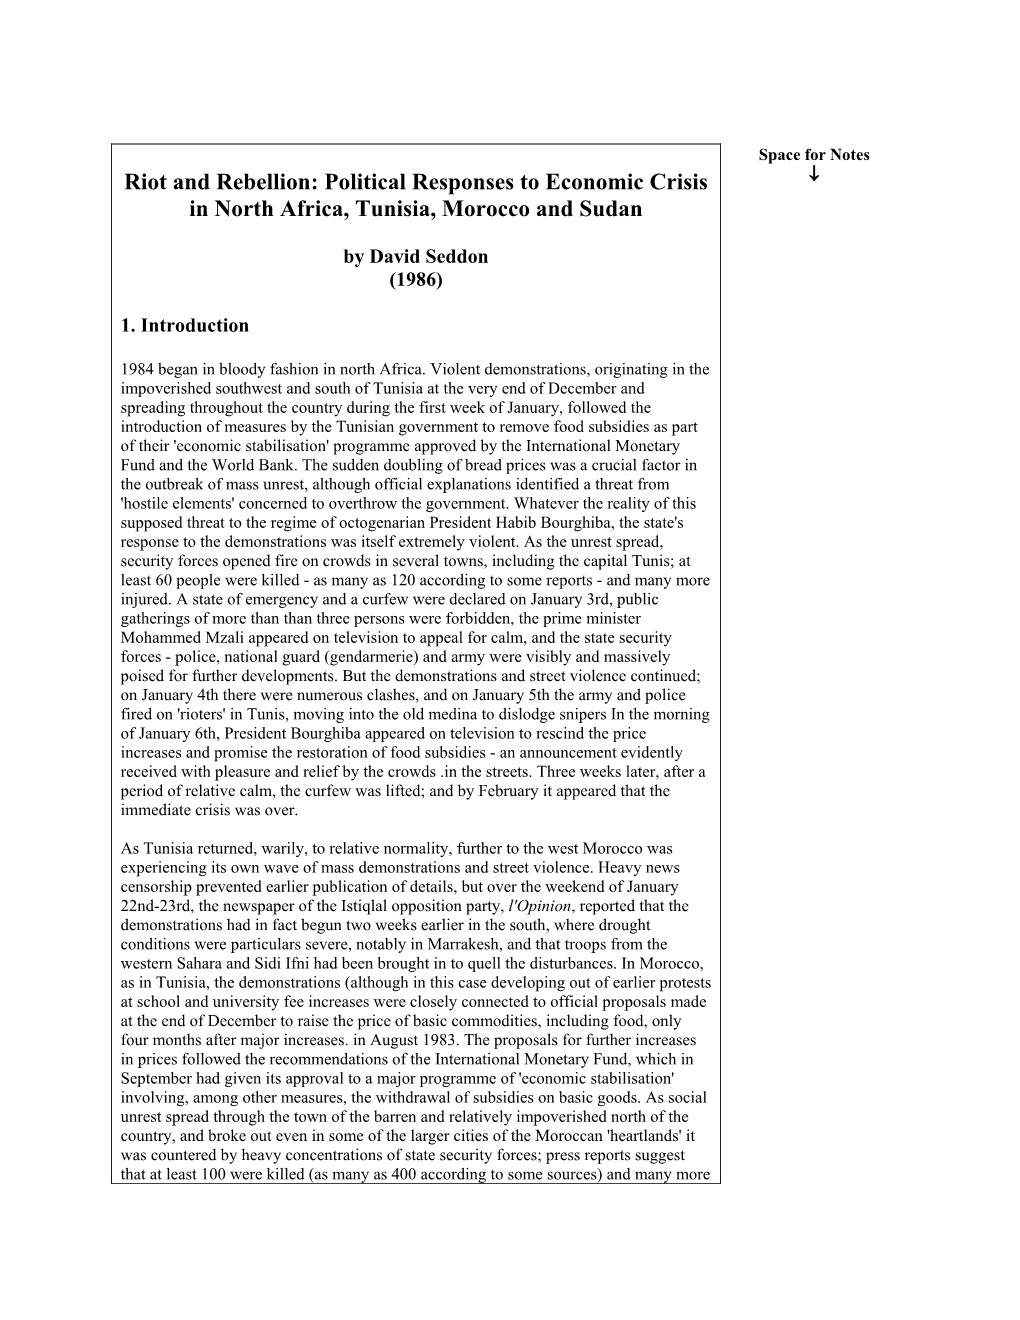 Riot and Rebellion: Political Responses to Economic Crisis ↓ in North Africa, Tunisia, Morocco and Sudan